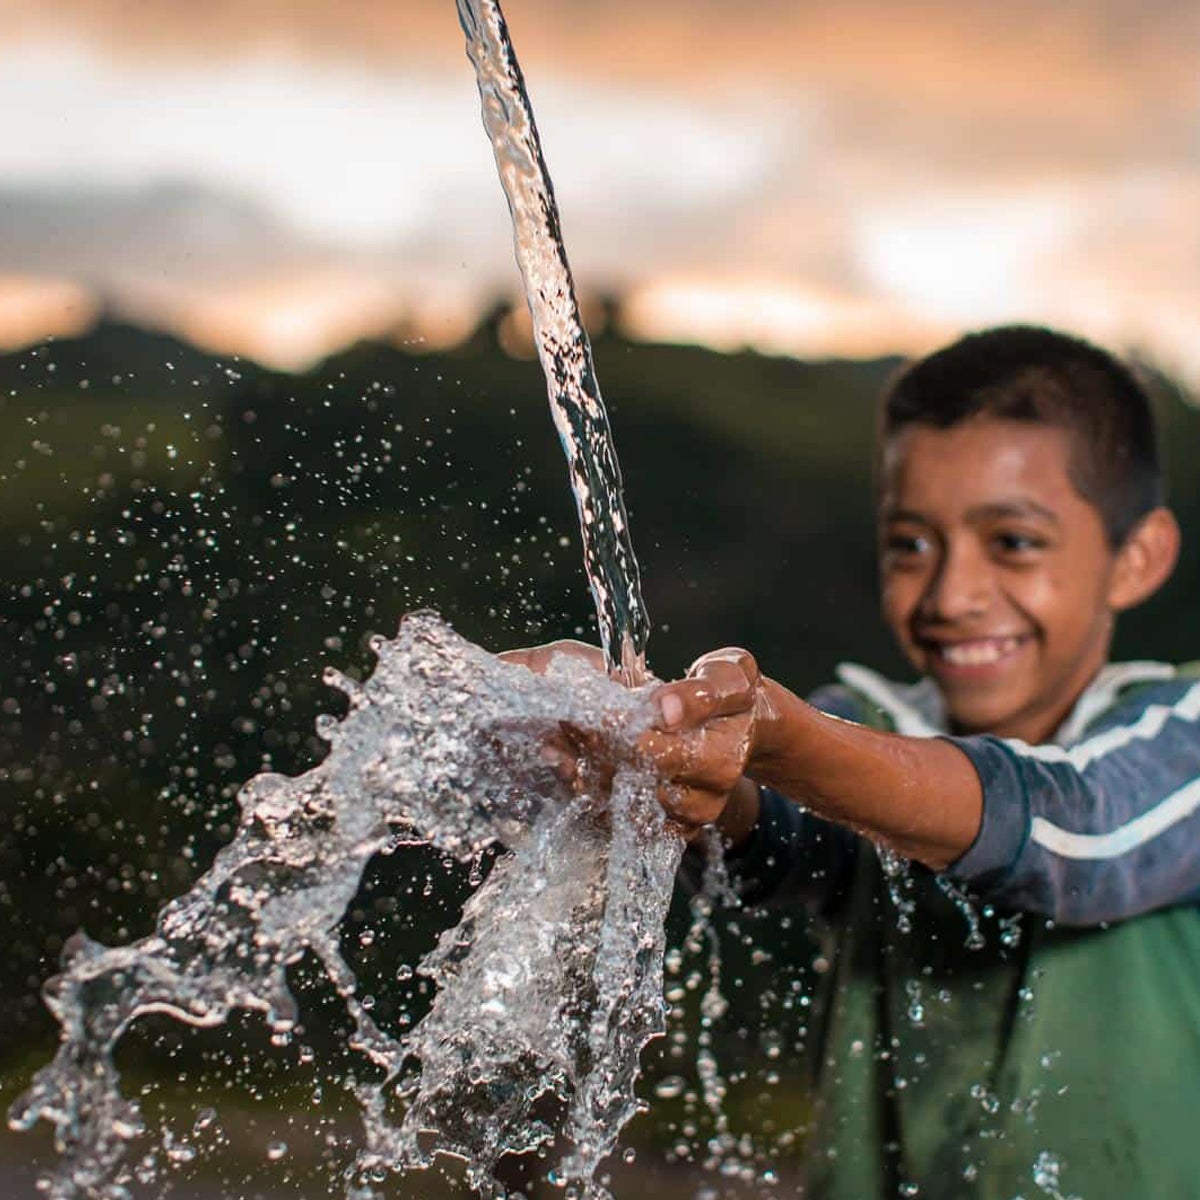 A boy splashing in fresh, clean water.